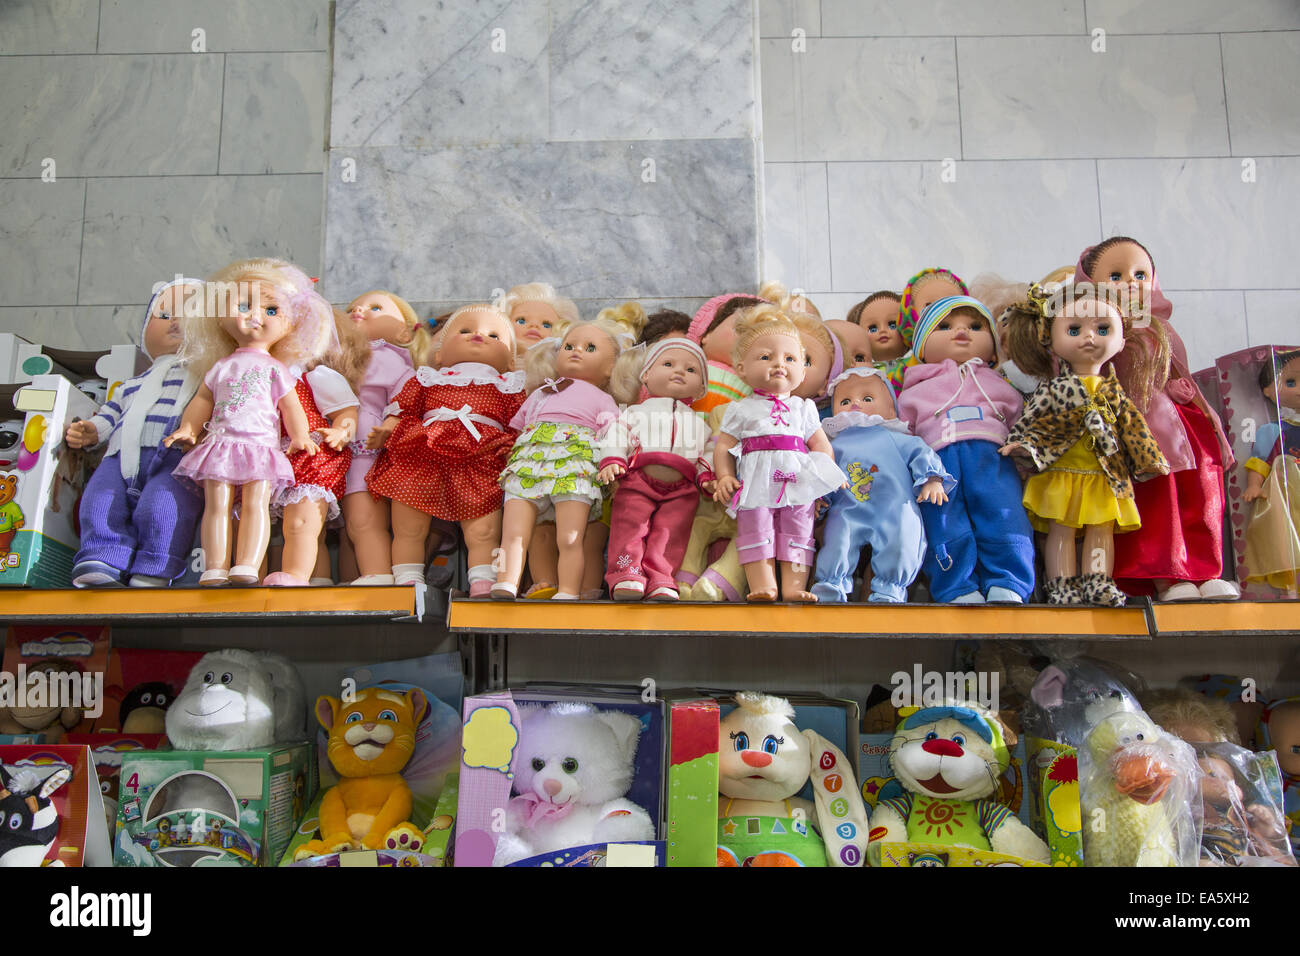 dolls. children's toys. Stock Photo